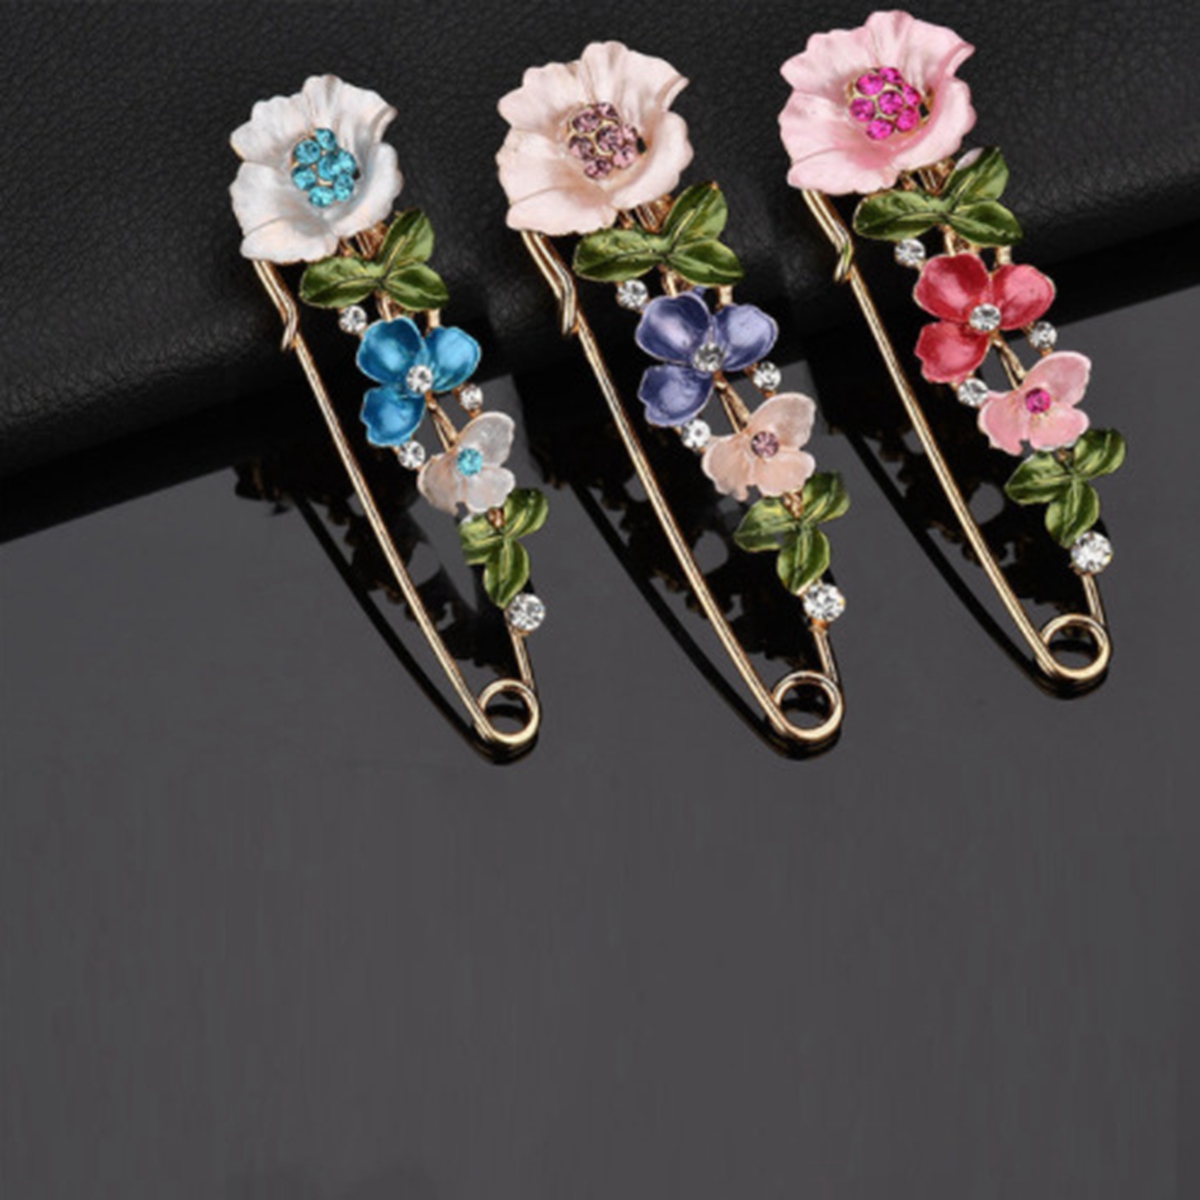 9 -stcs vintage bloem emailbroche elegante pin strass sieraden vrouwen vestiging sjaaljurk kleding accessoires